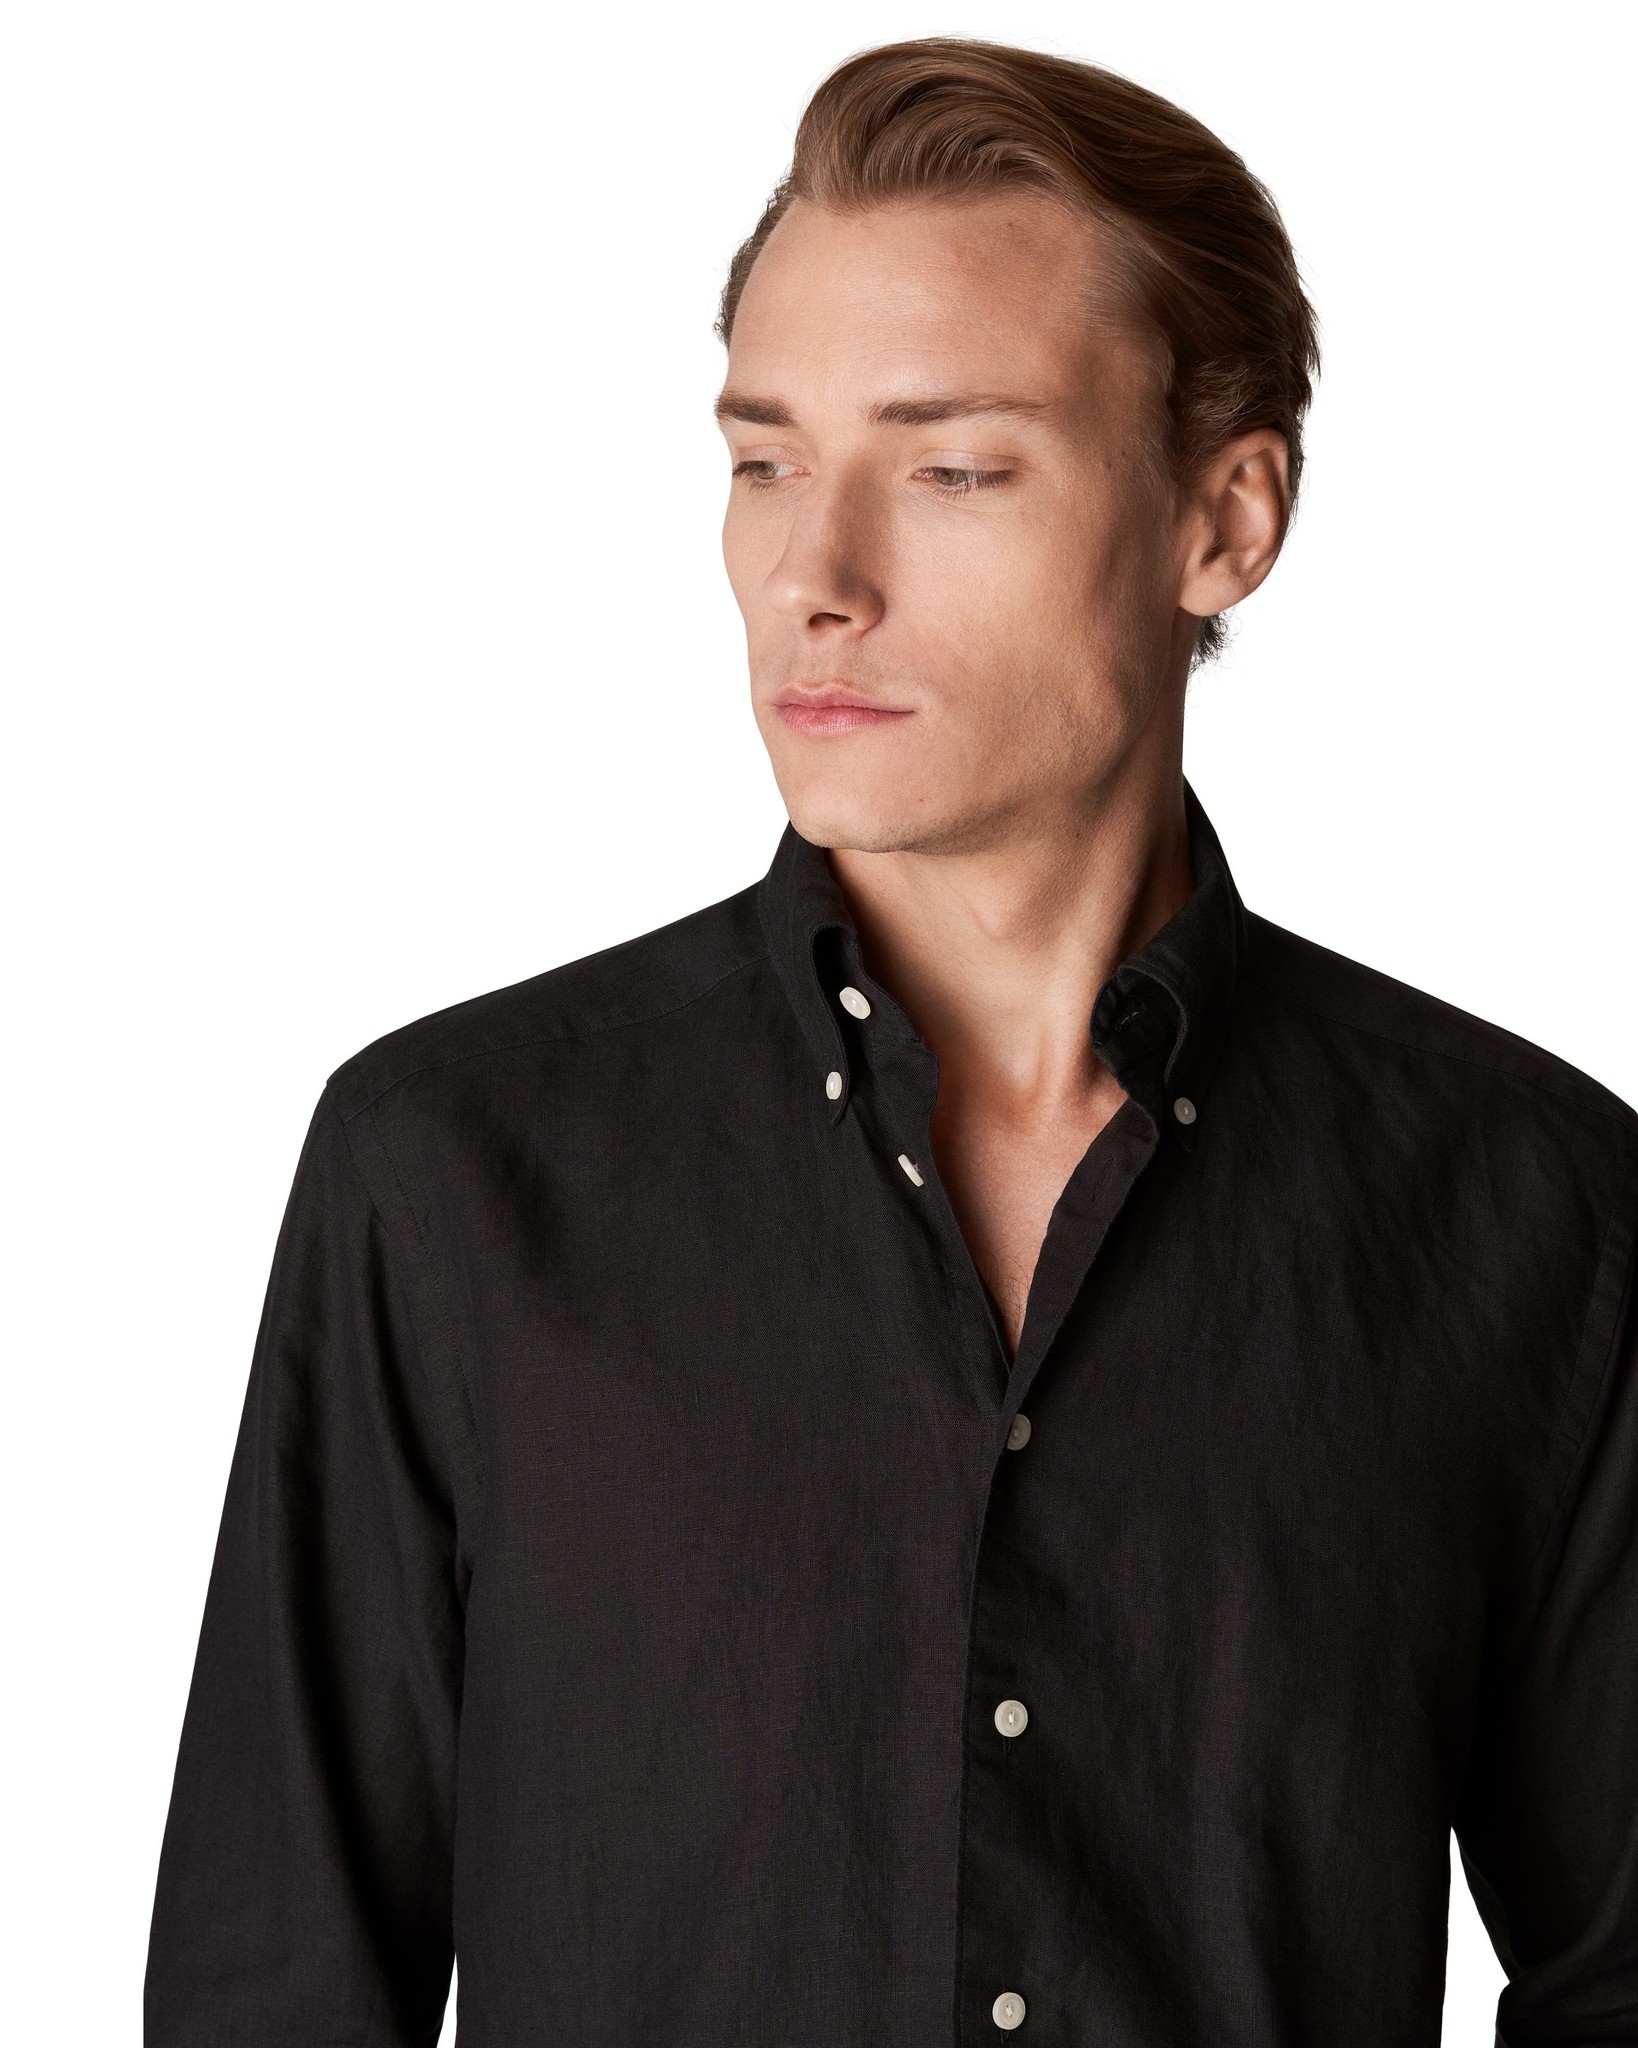 Eton Black Linen shirt - Button down collar